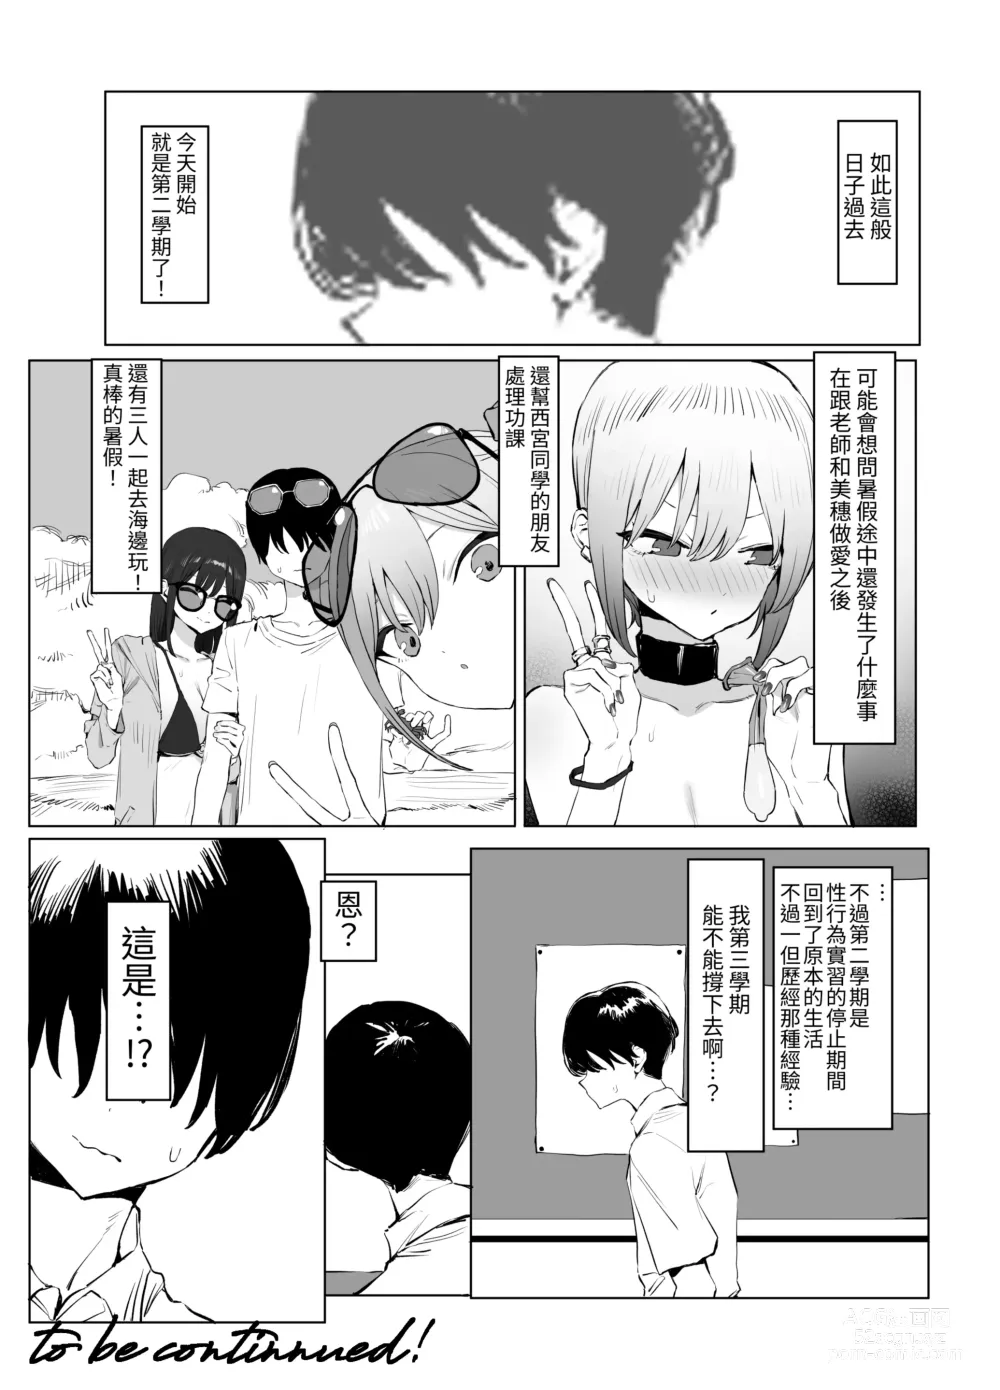 Page 126 of doujinshi Seikoui Jisshuu 2